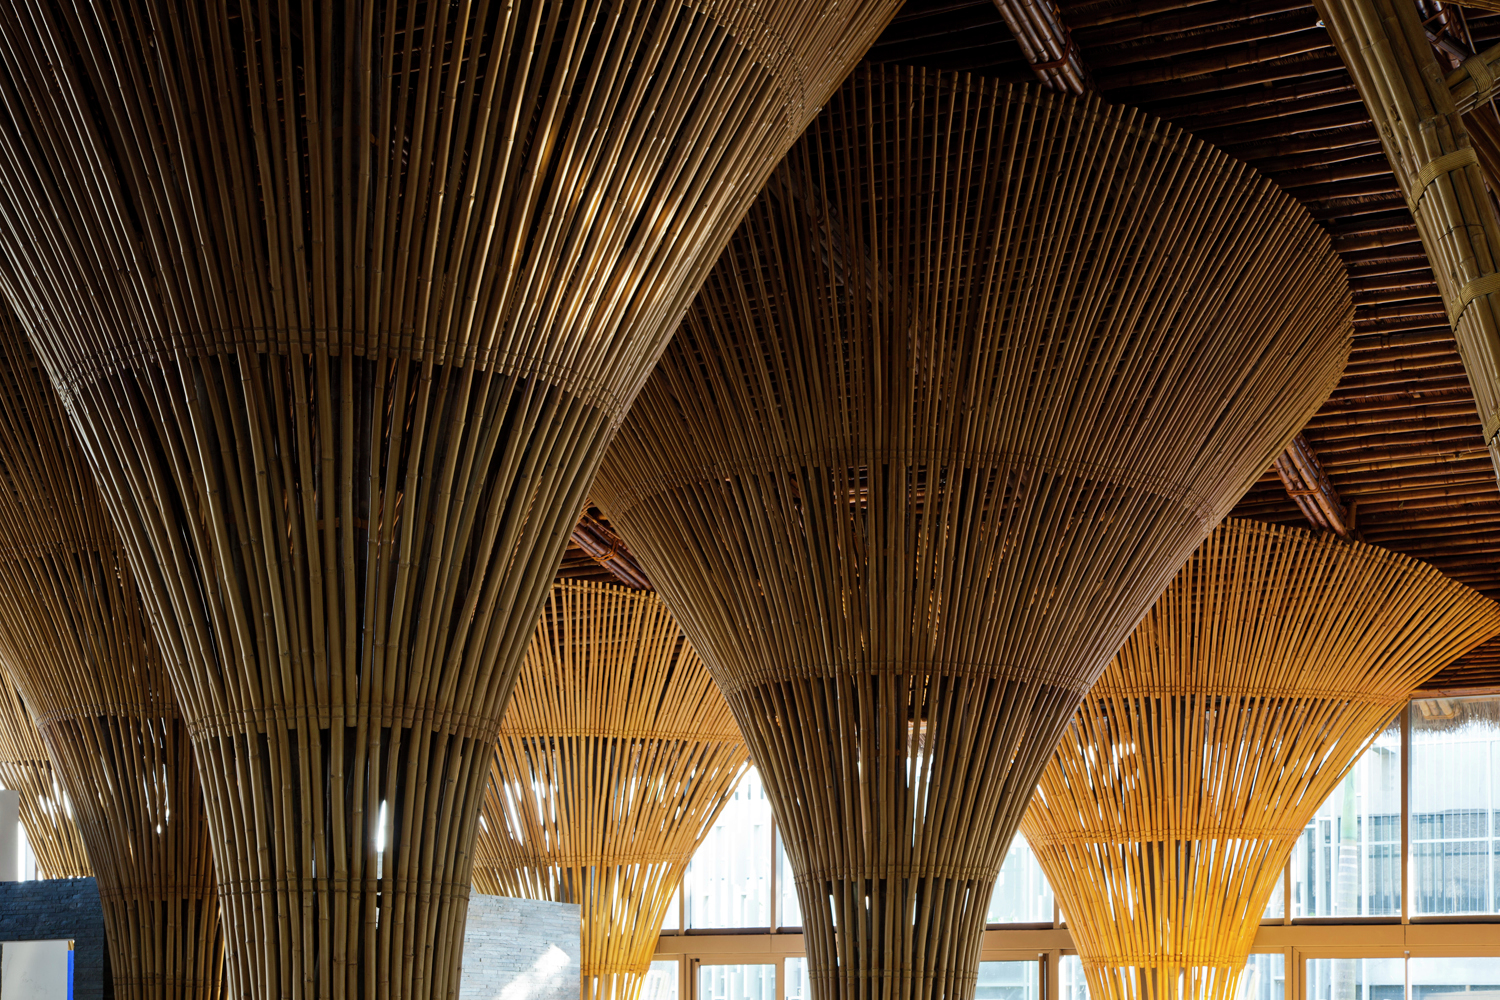 07_detail-of-bamboo-column